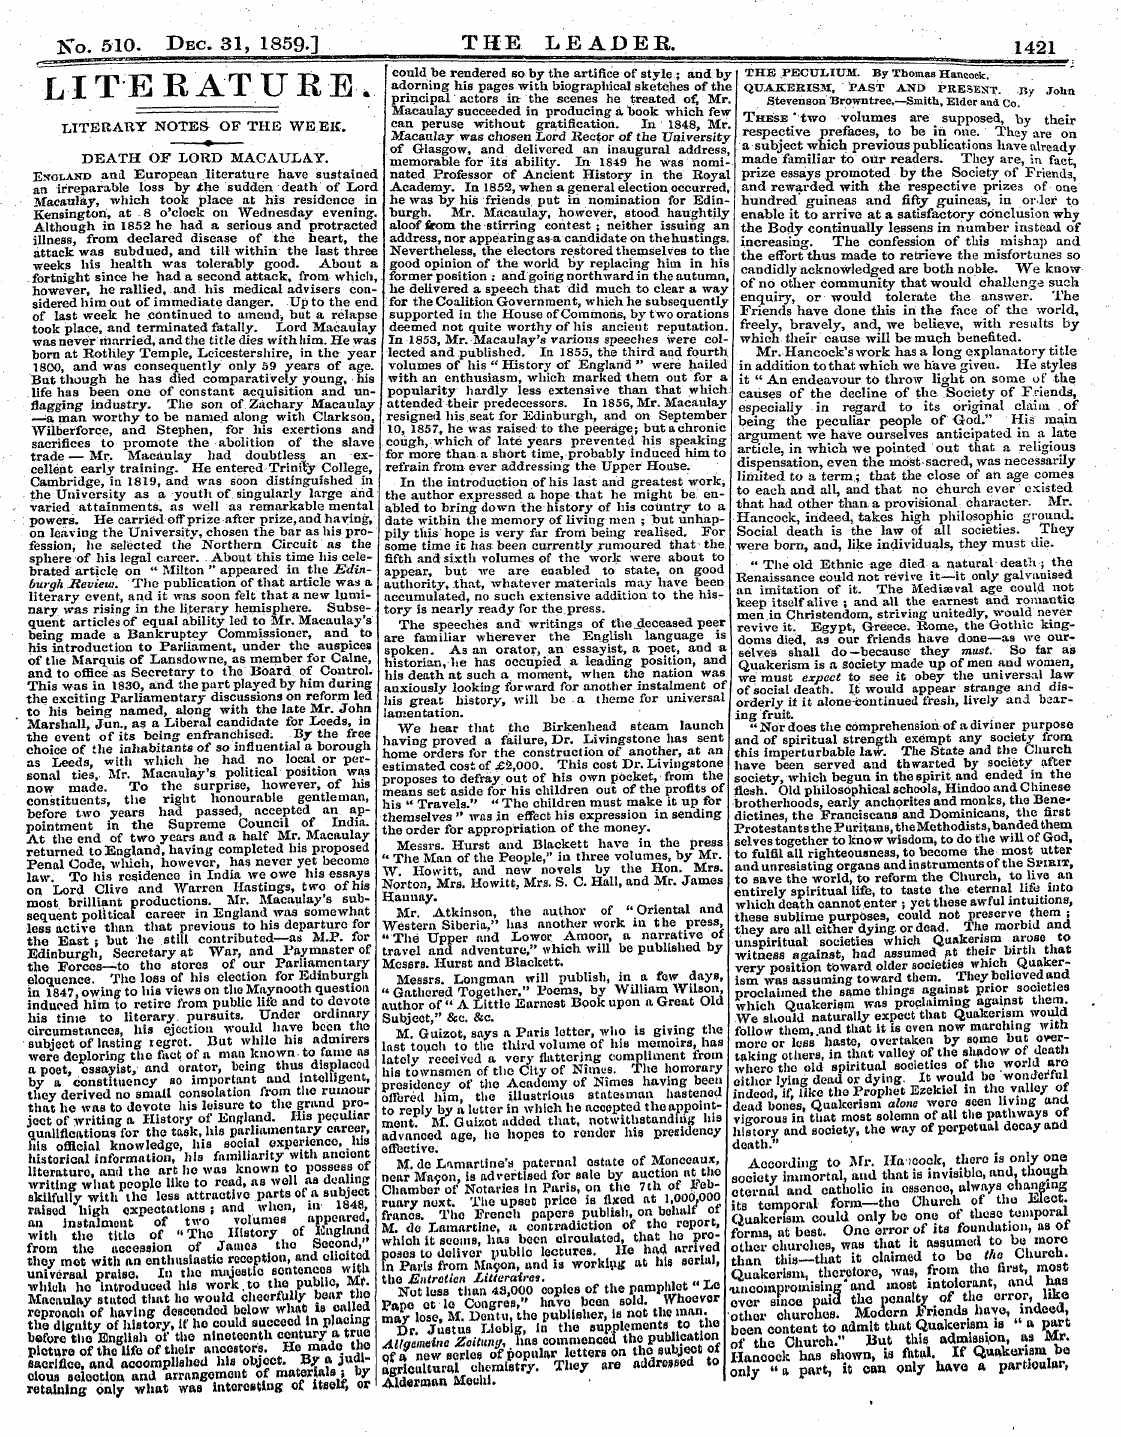 Leader (1850-1860): jS F Y, 2nd edition - Liteeature,